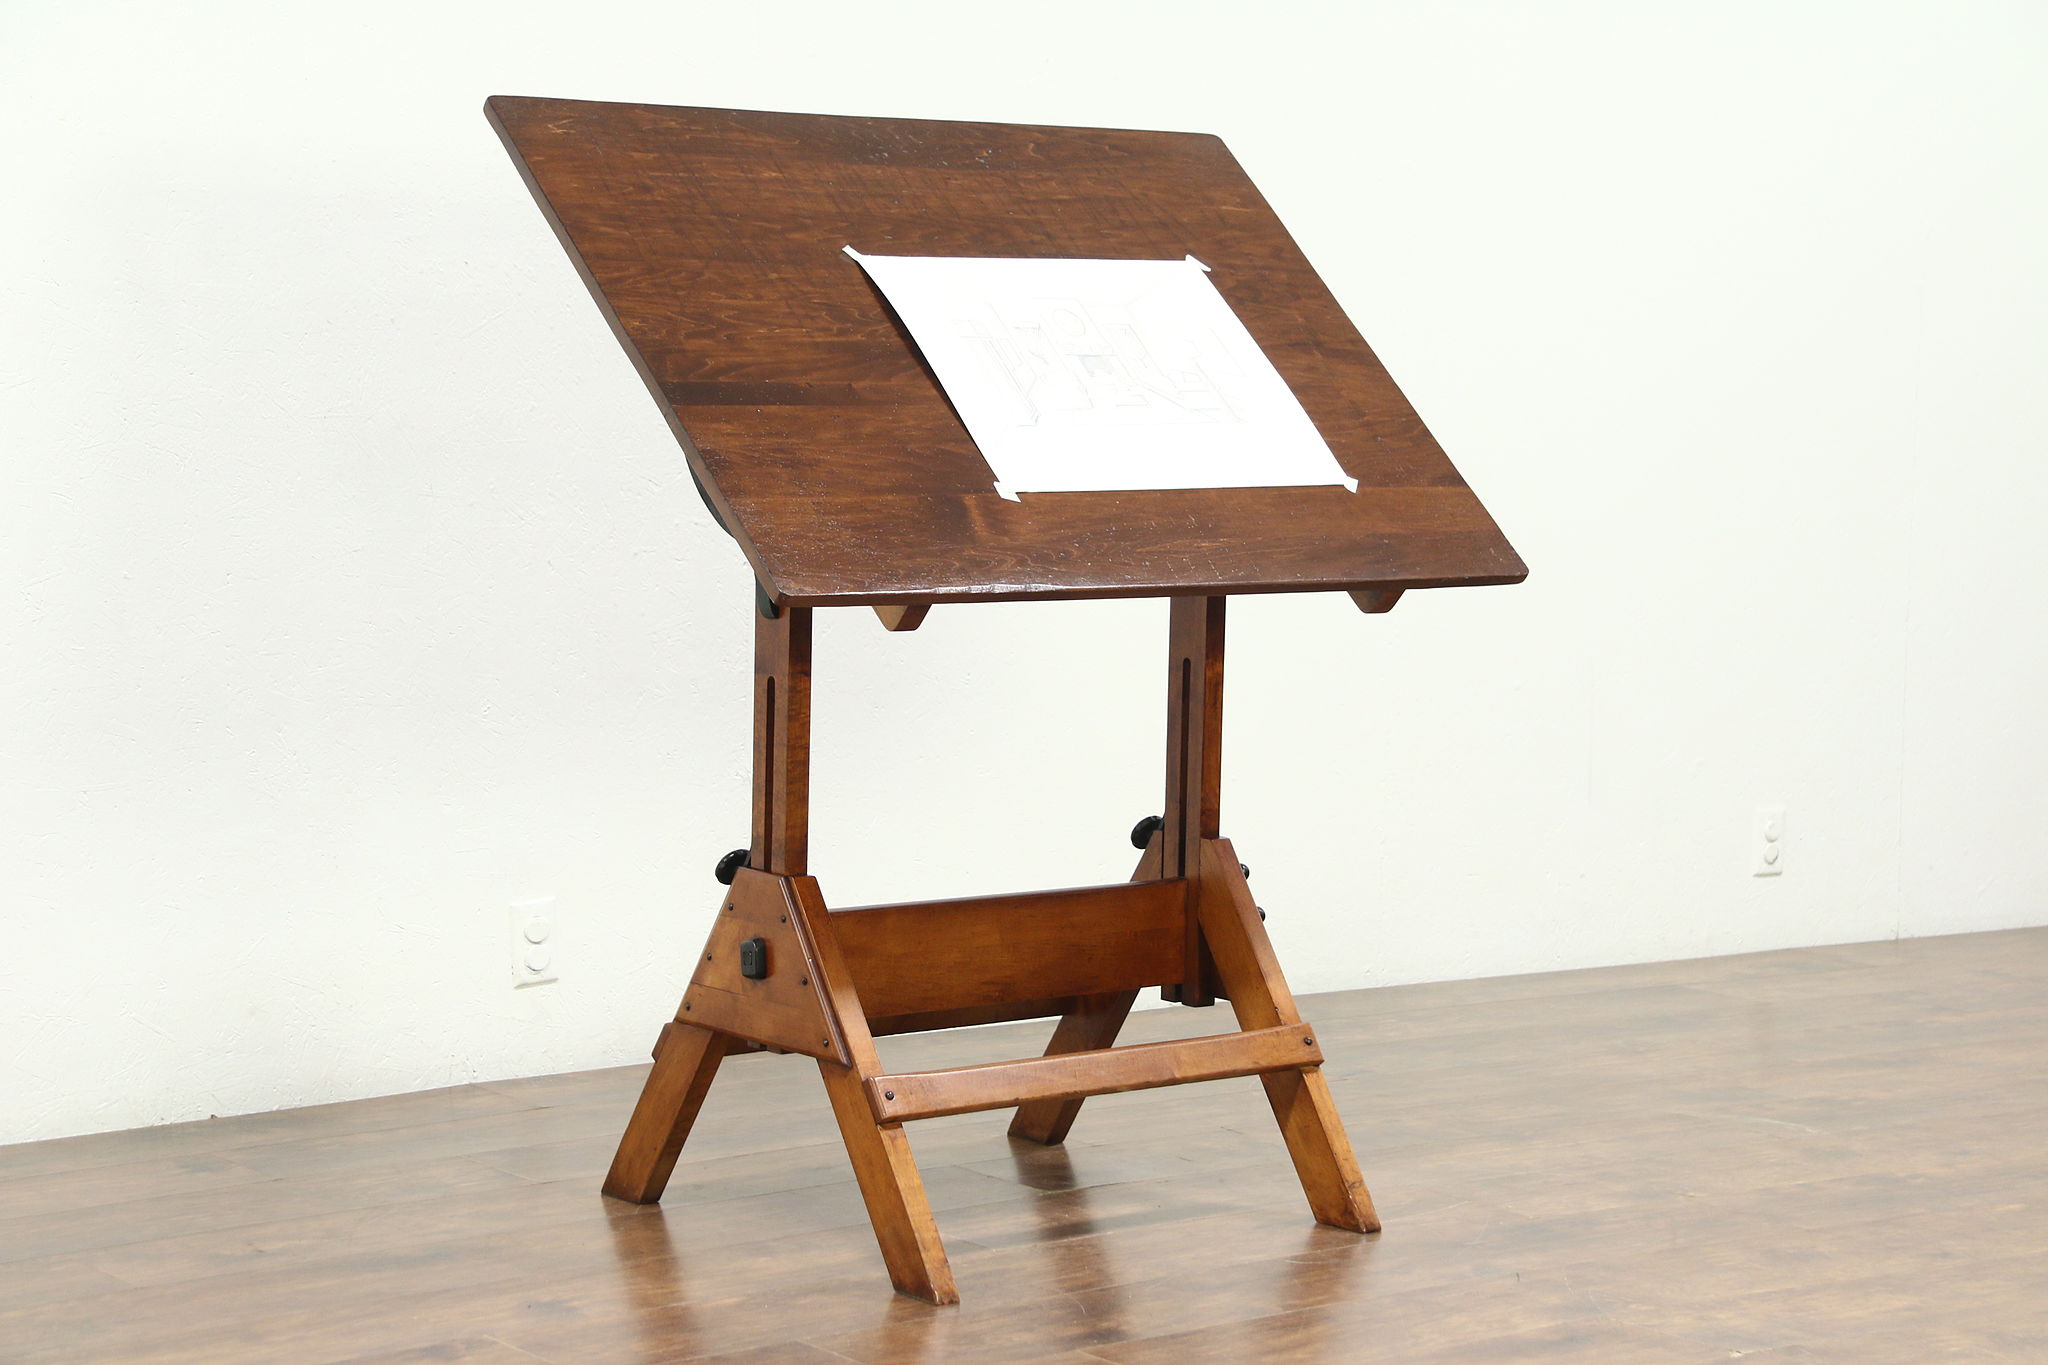 Drafting or Wine Table, Adjustable Vintage Artist Desk, Kitchen Island